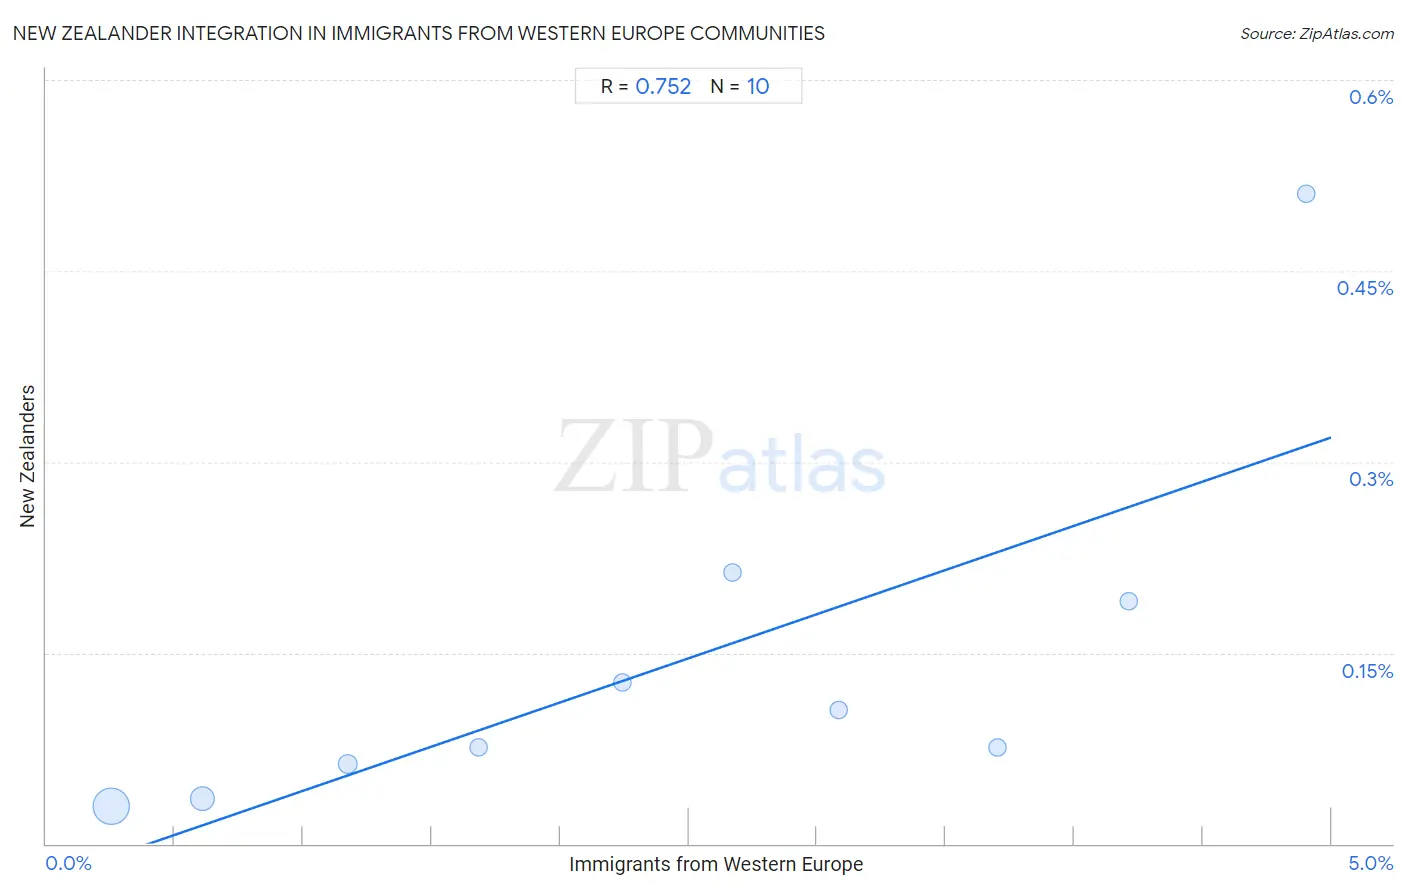 Immigrants from Western Europe Integration in New Zealander Communities